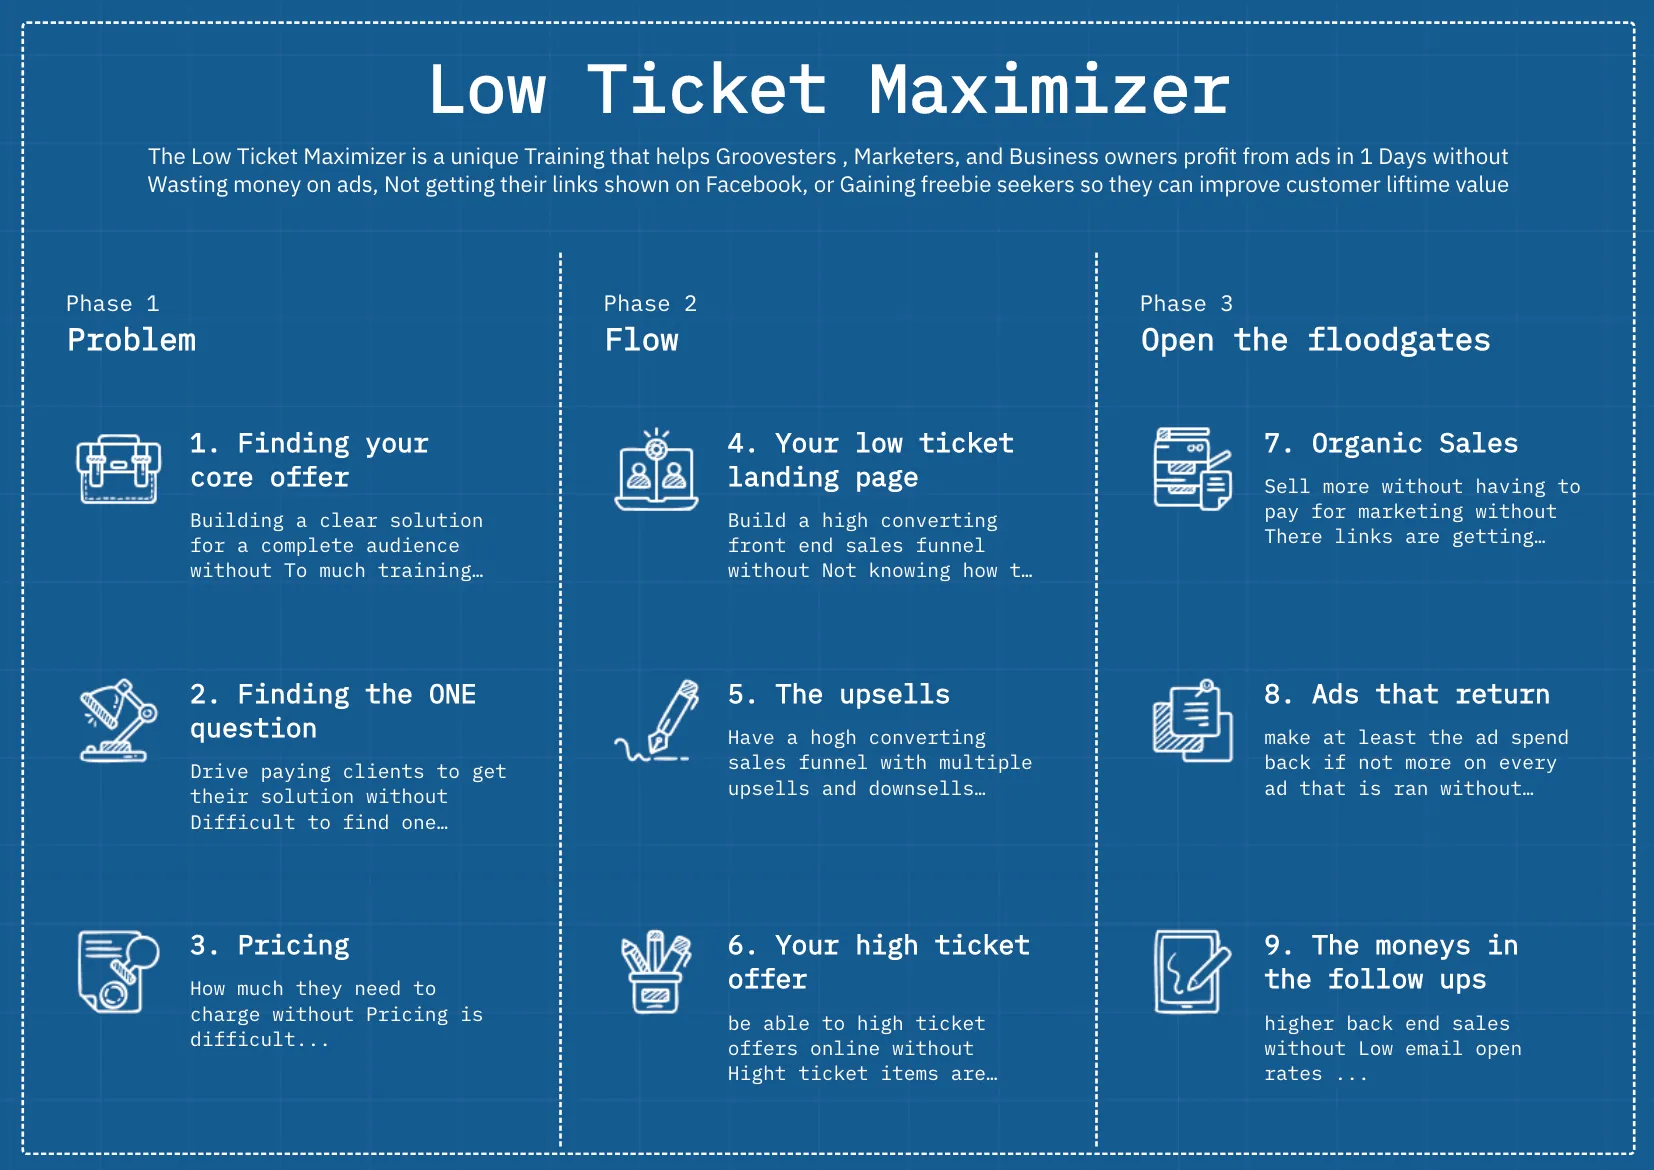 Low ticket maximizer road map